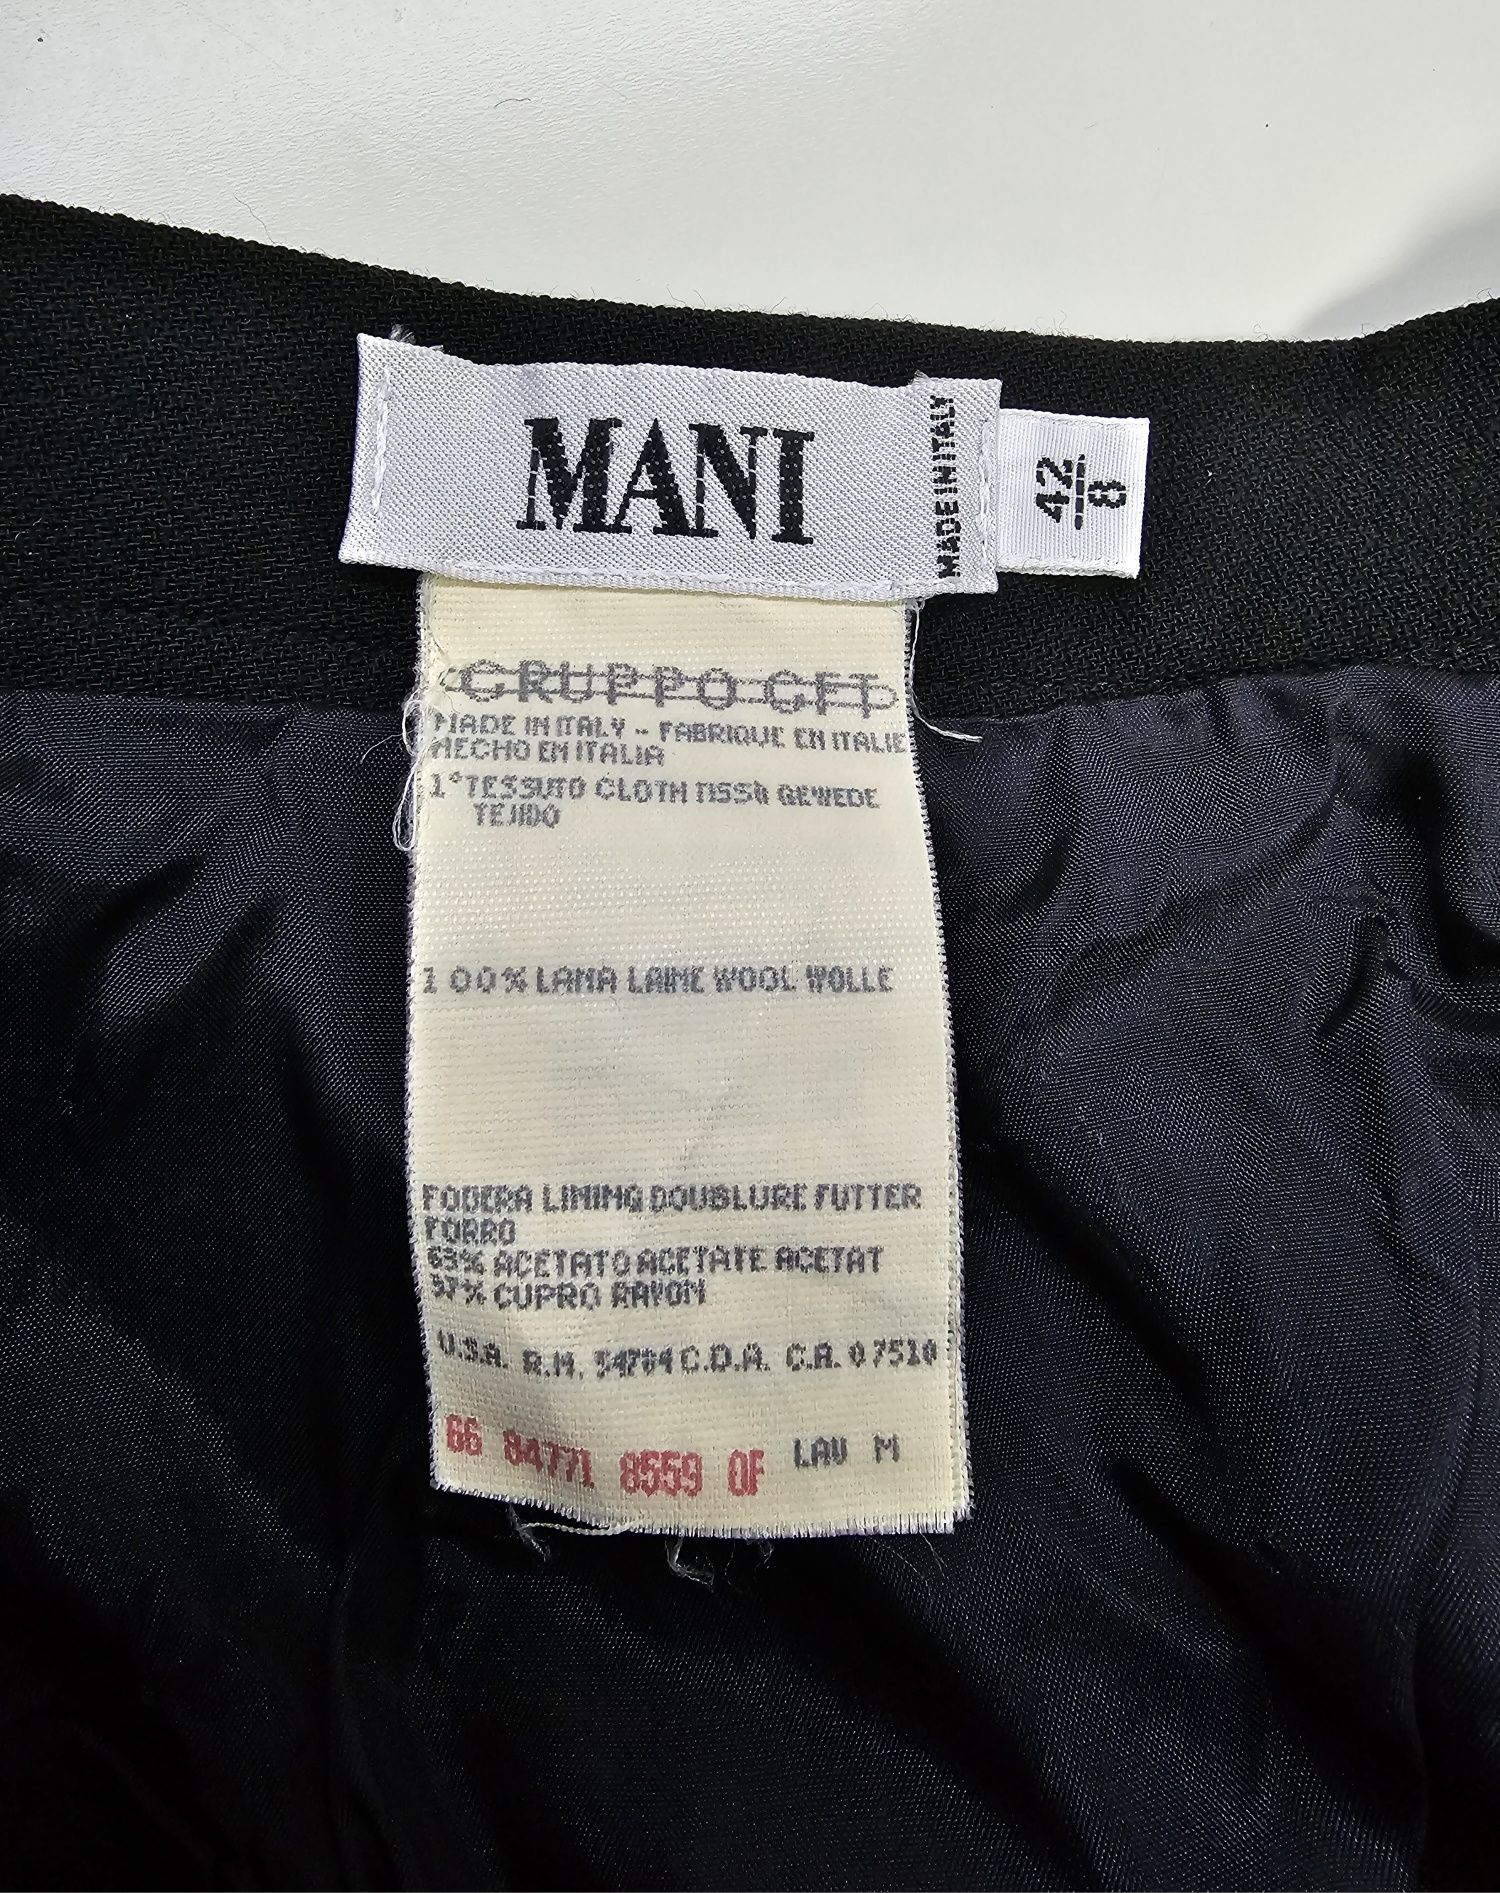 Mani by Armani spódnica czarna wełniana vintage